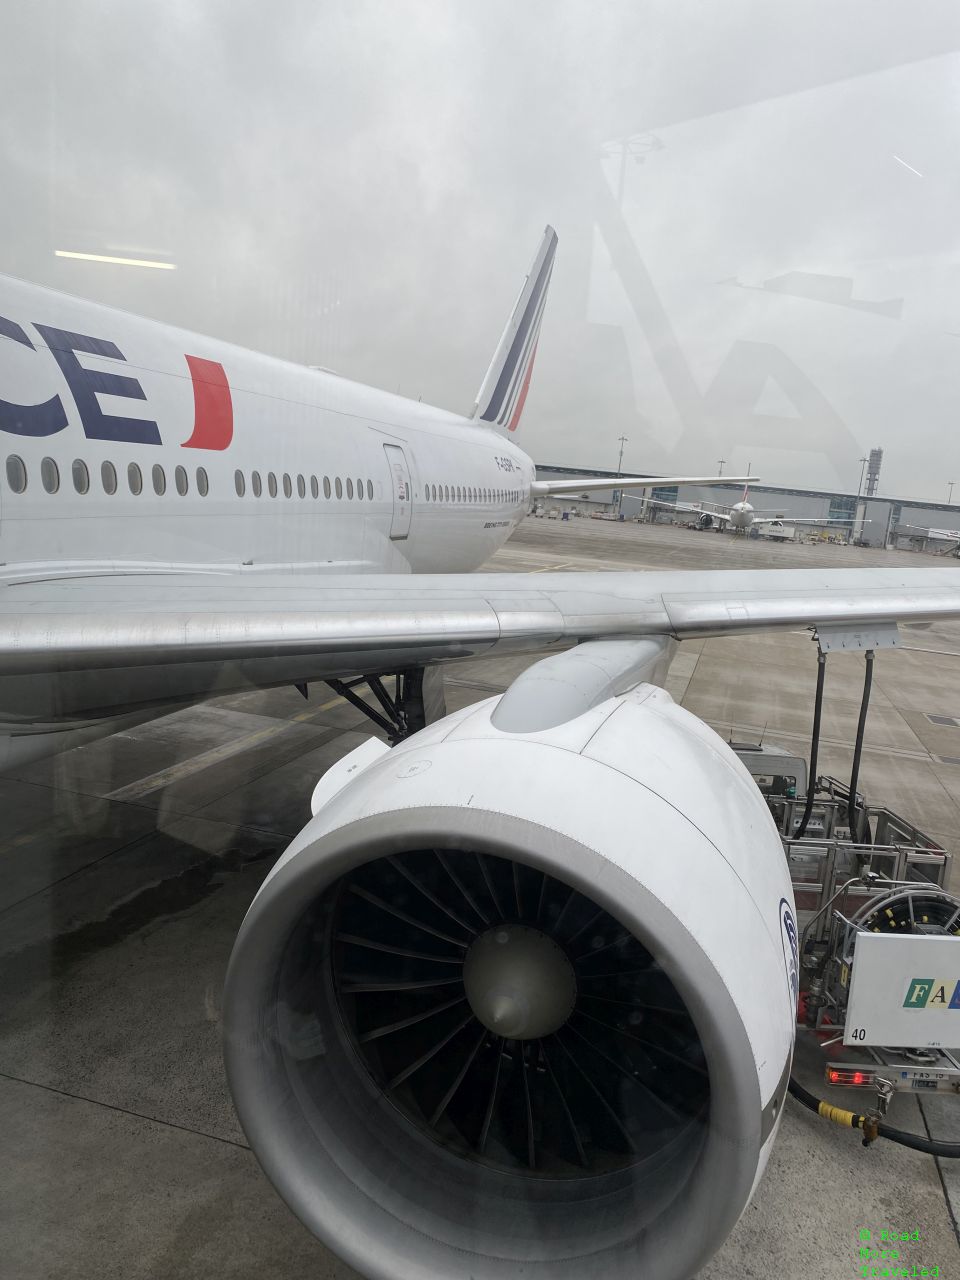 Review: Air France B772 Premium Economy, Paris to Dallas - Travel